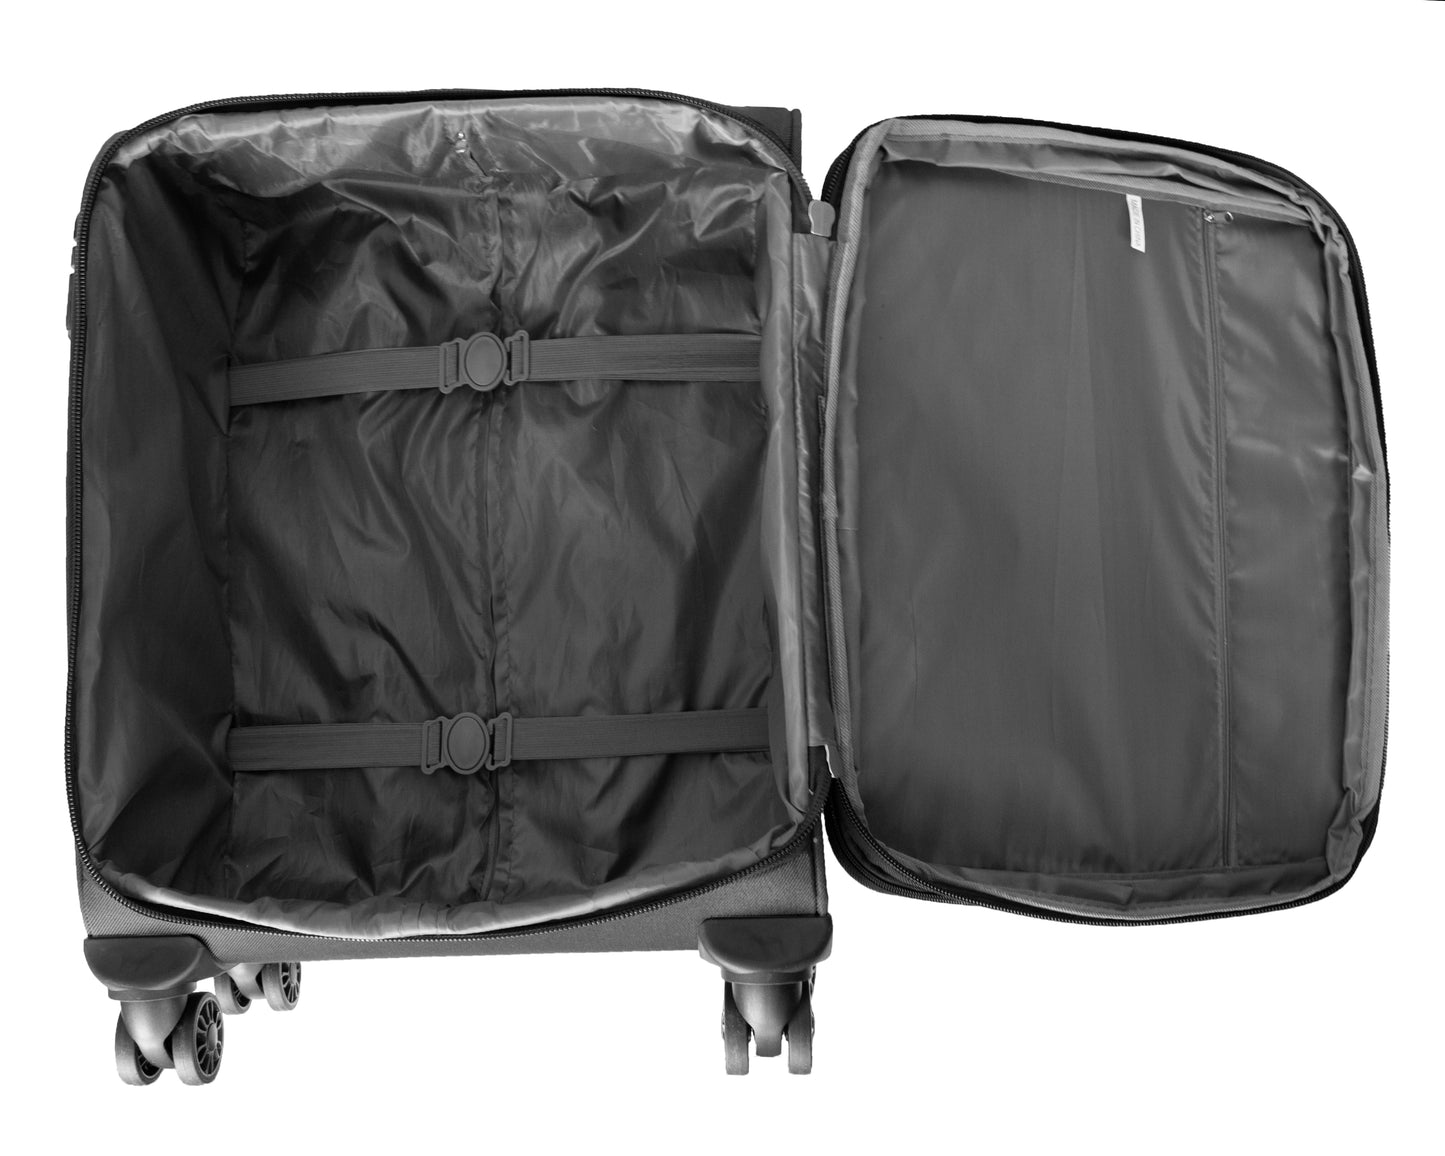 4 Wheels Soft Case Luggage Black